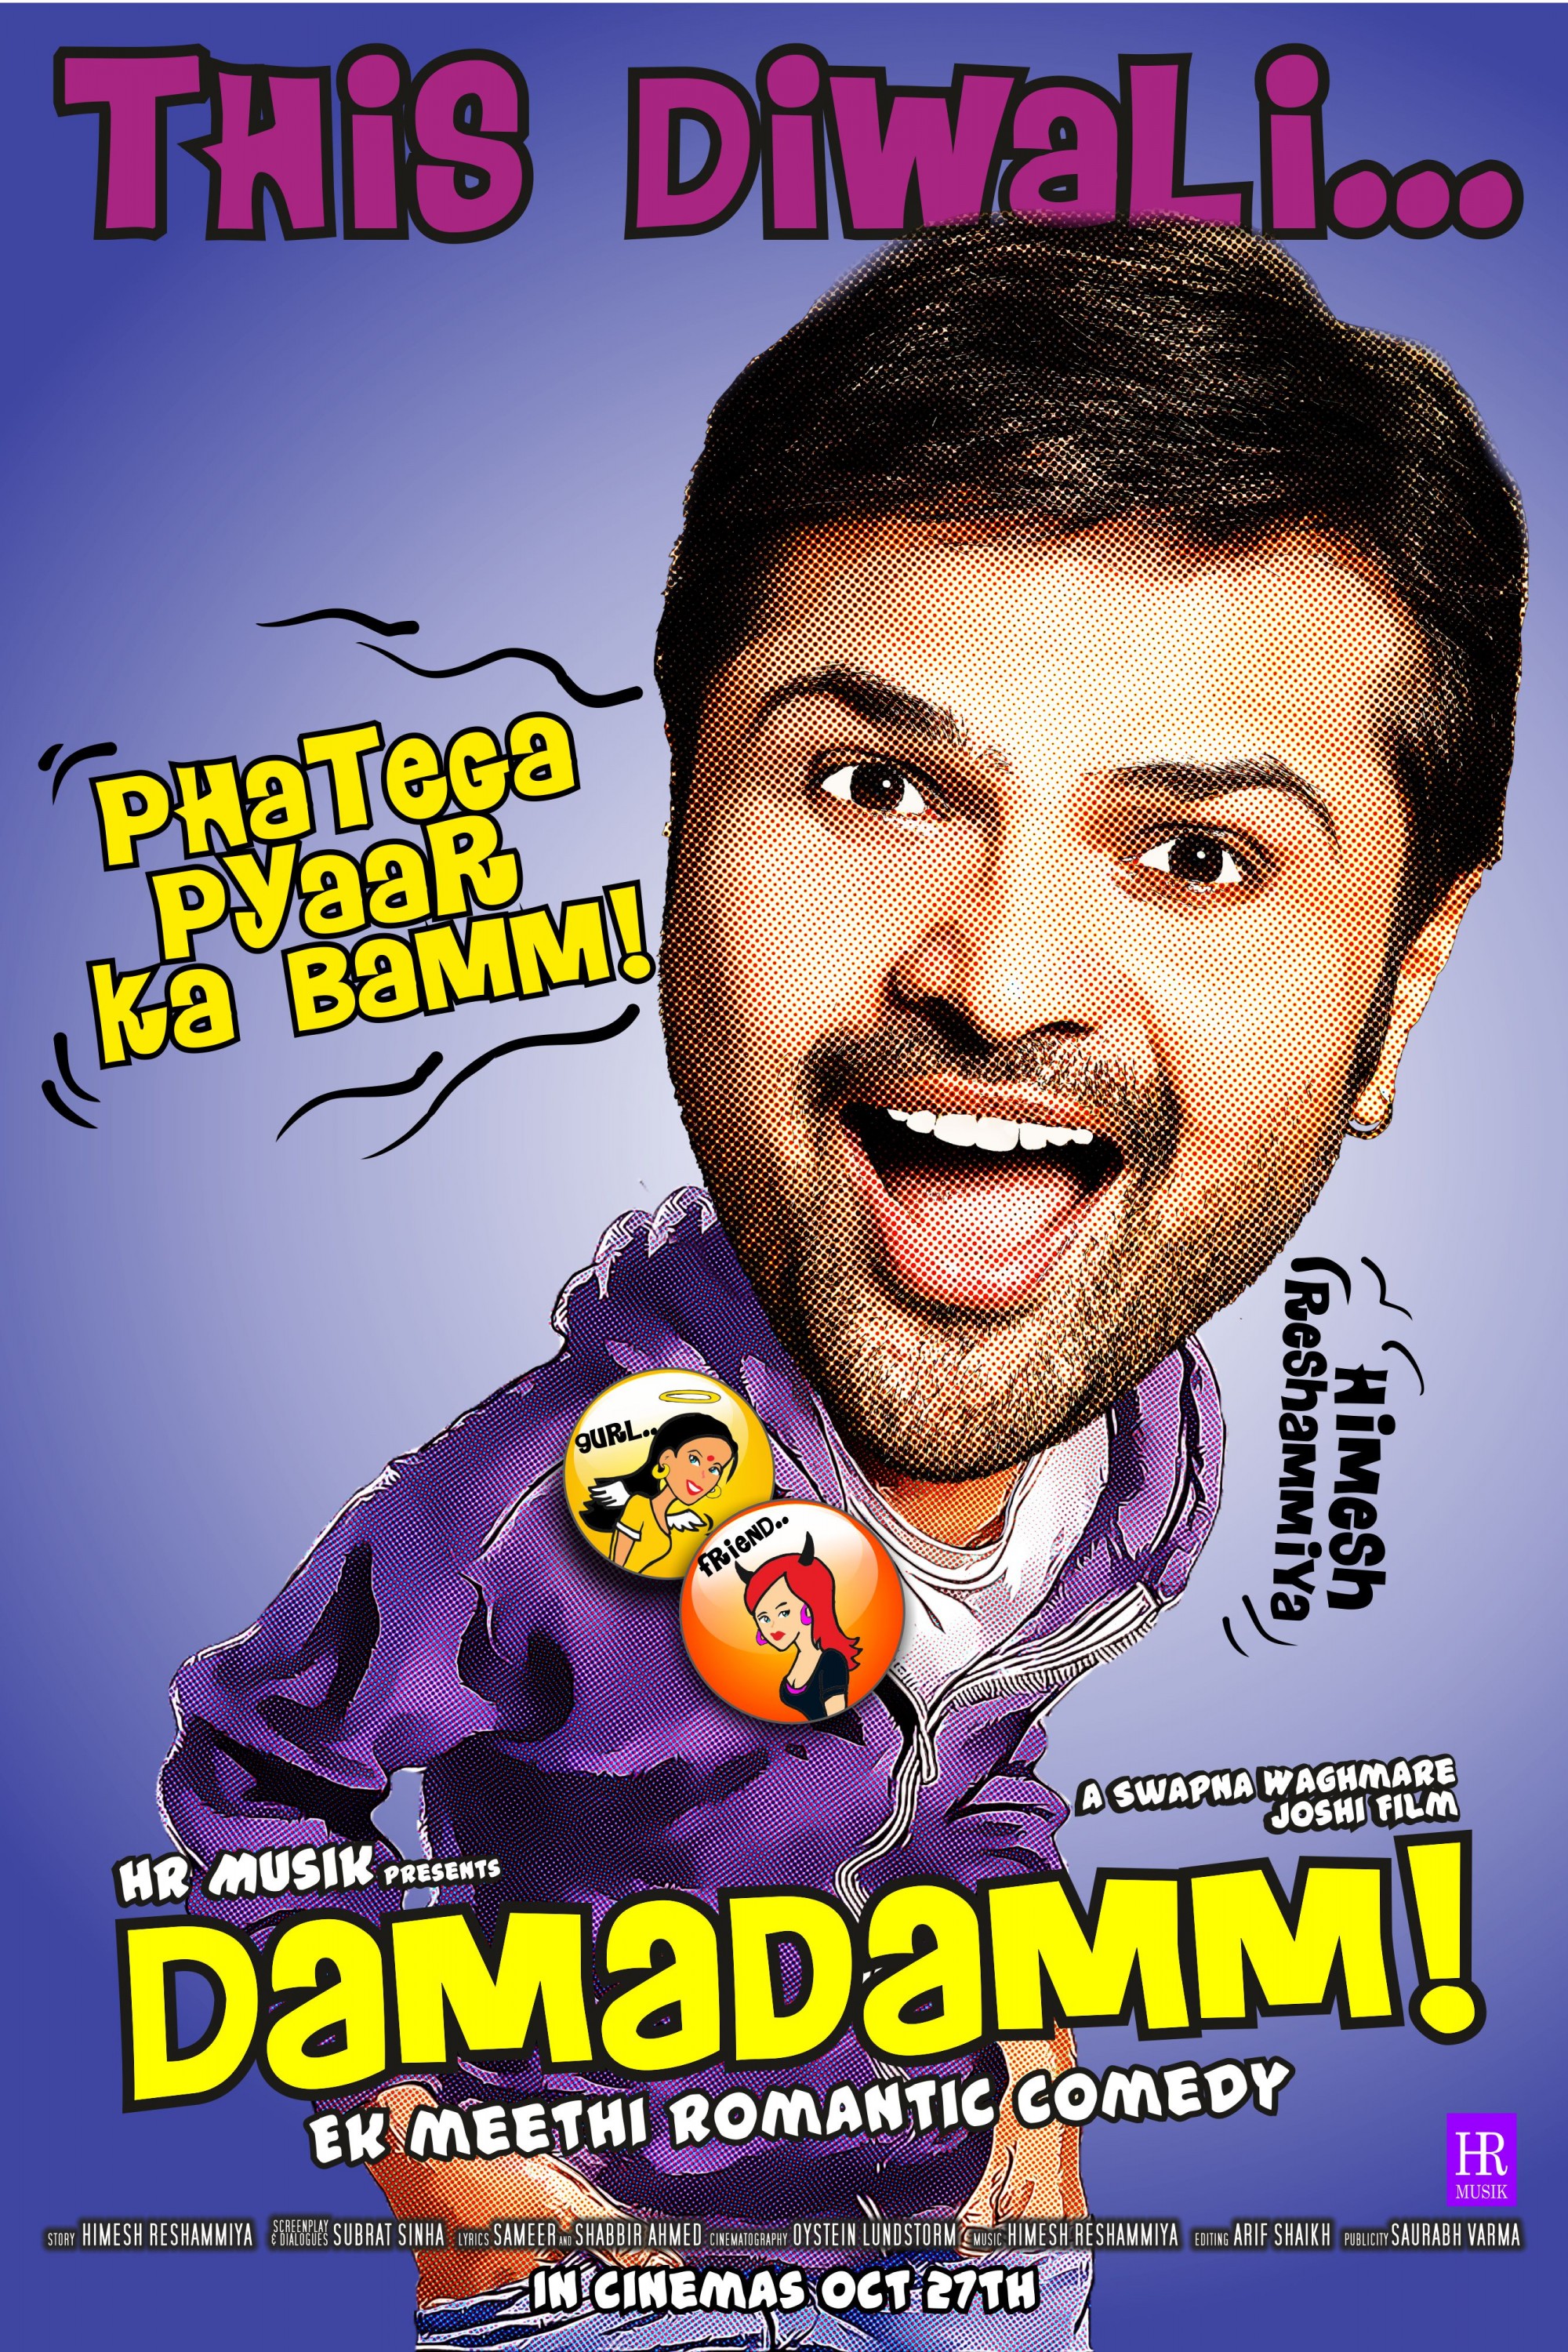 Mega Sized Movie Poster Image for Damadamm (#1 of 2)